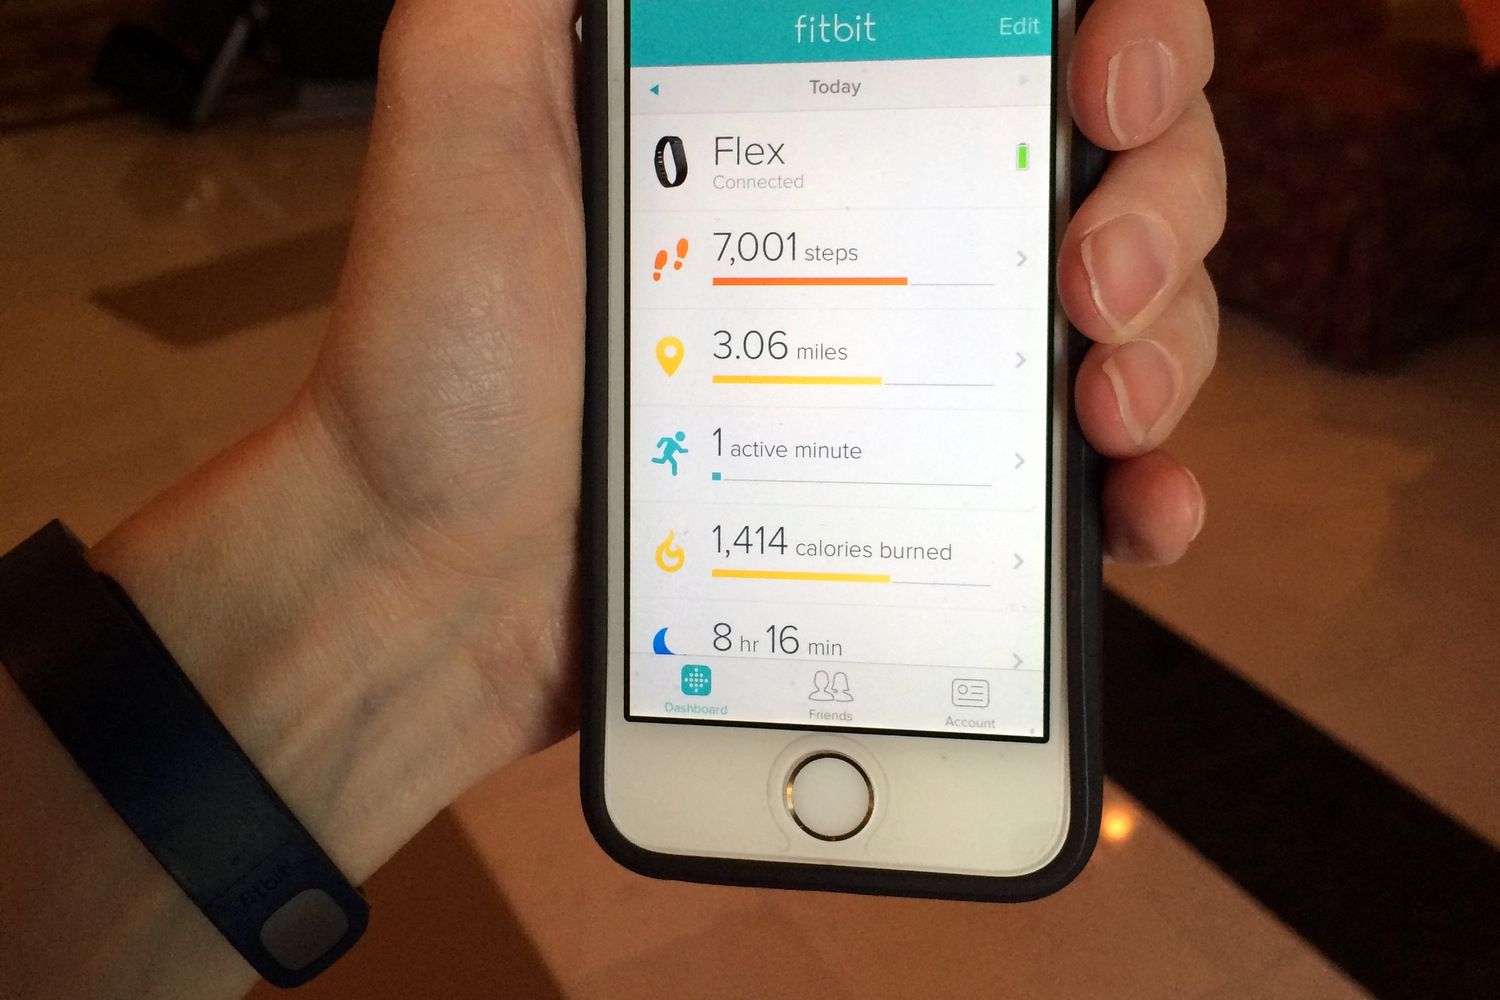 Fitbit Flex Activity Data on App